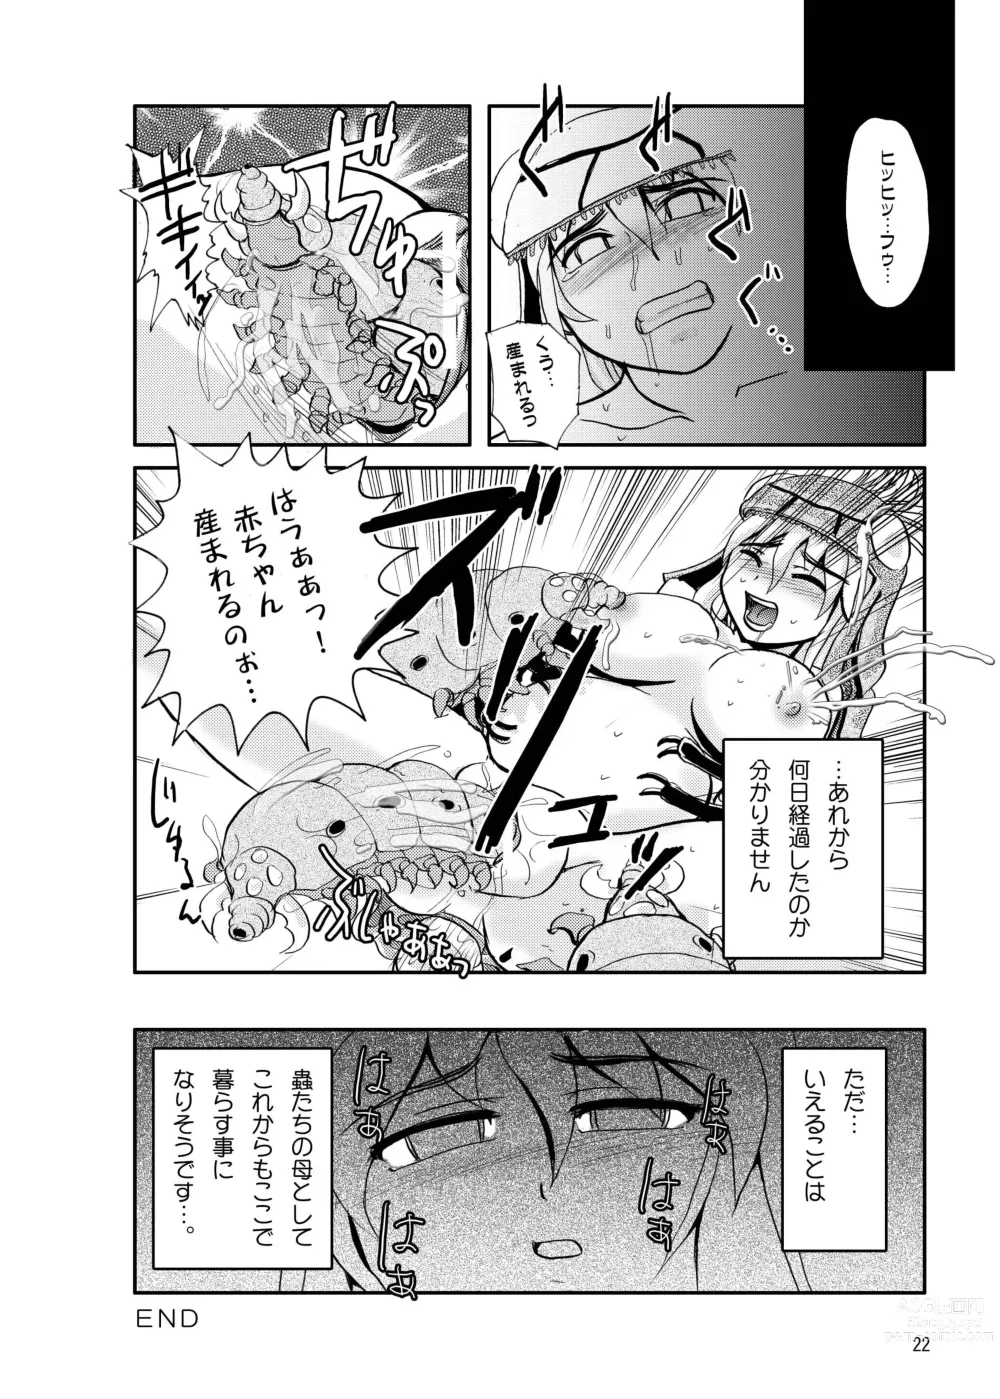 Page 24 of doujinshi Deep Strike